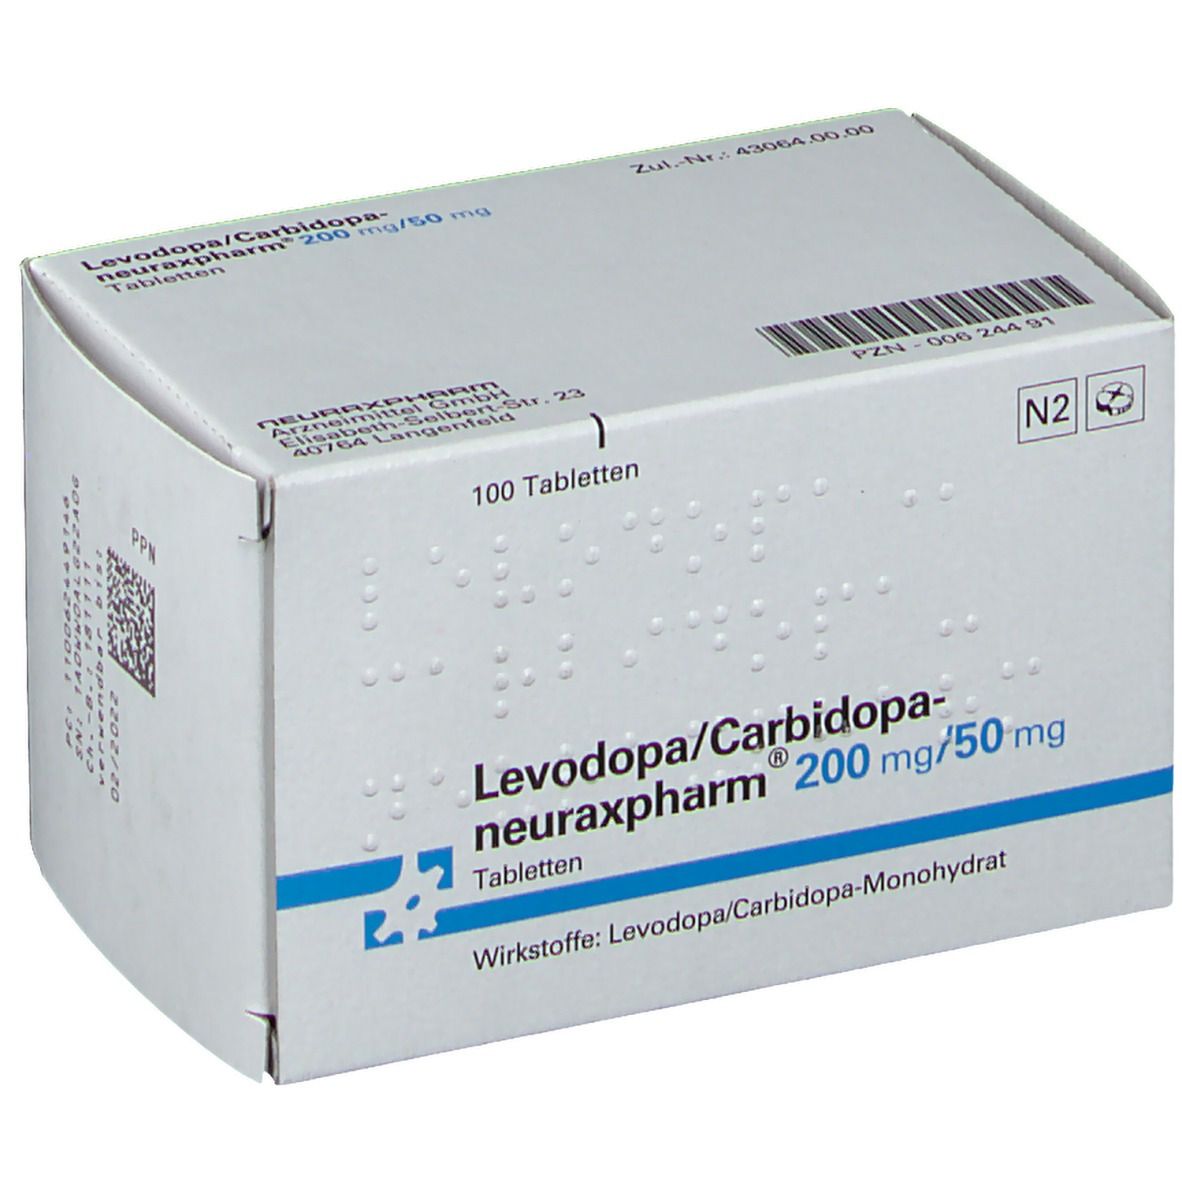 Levodopa/Carbidopa-neuraxpharm® 200 mg/50 mg